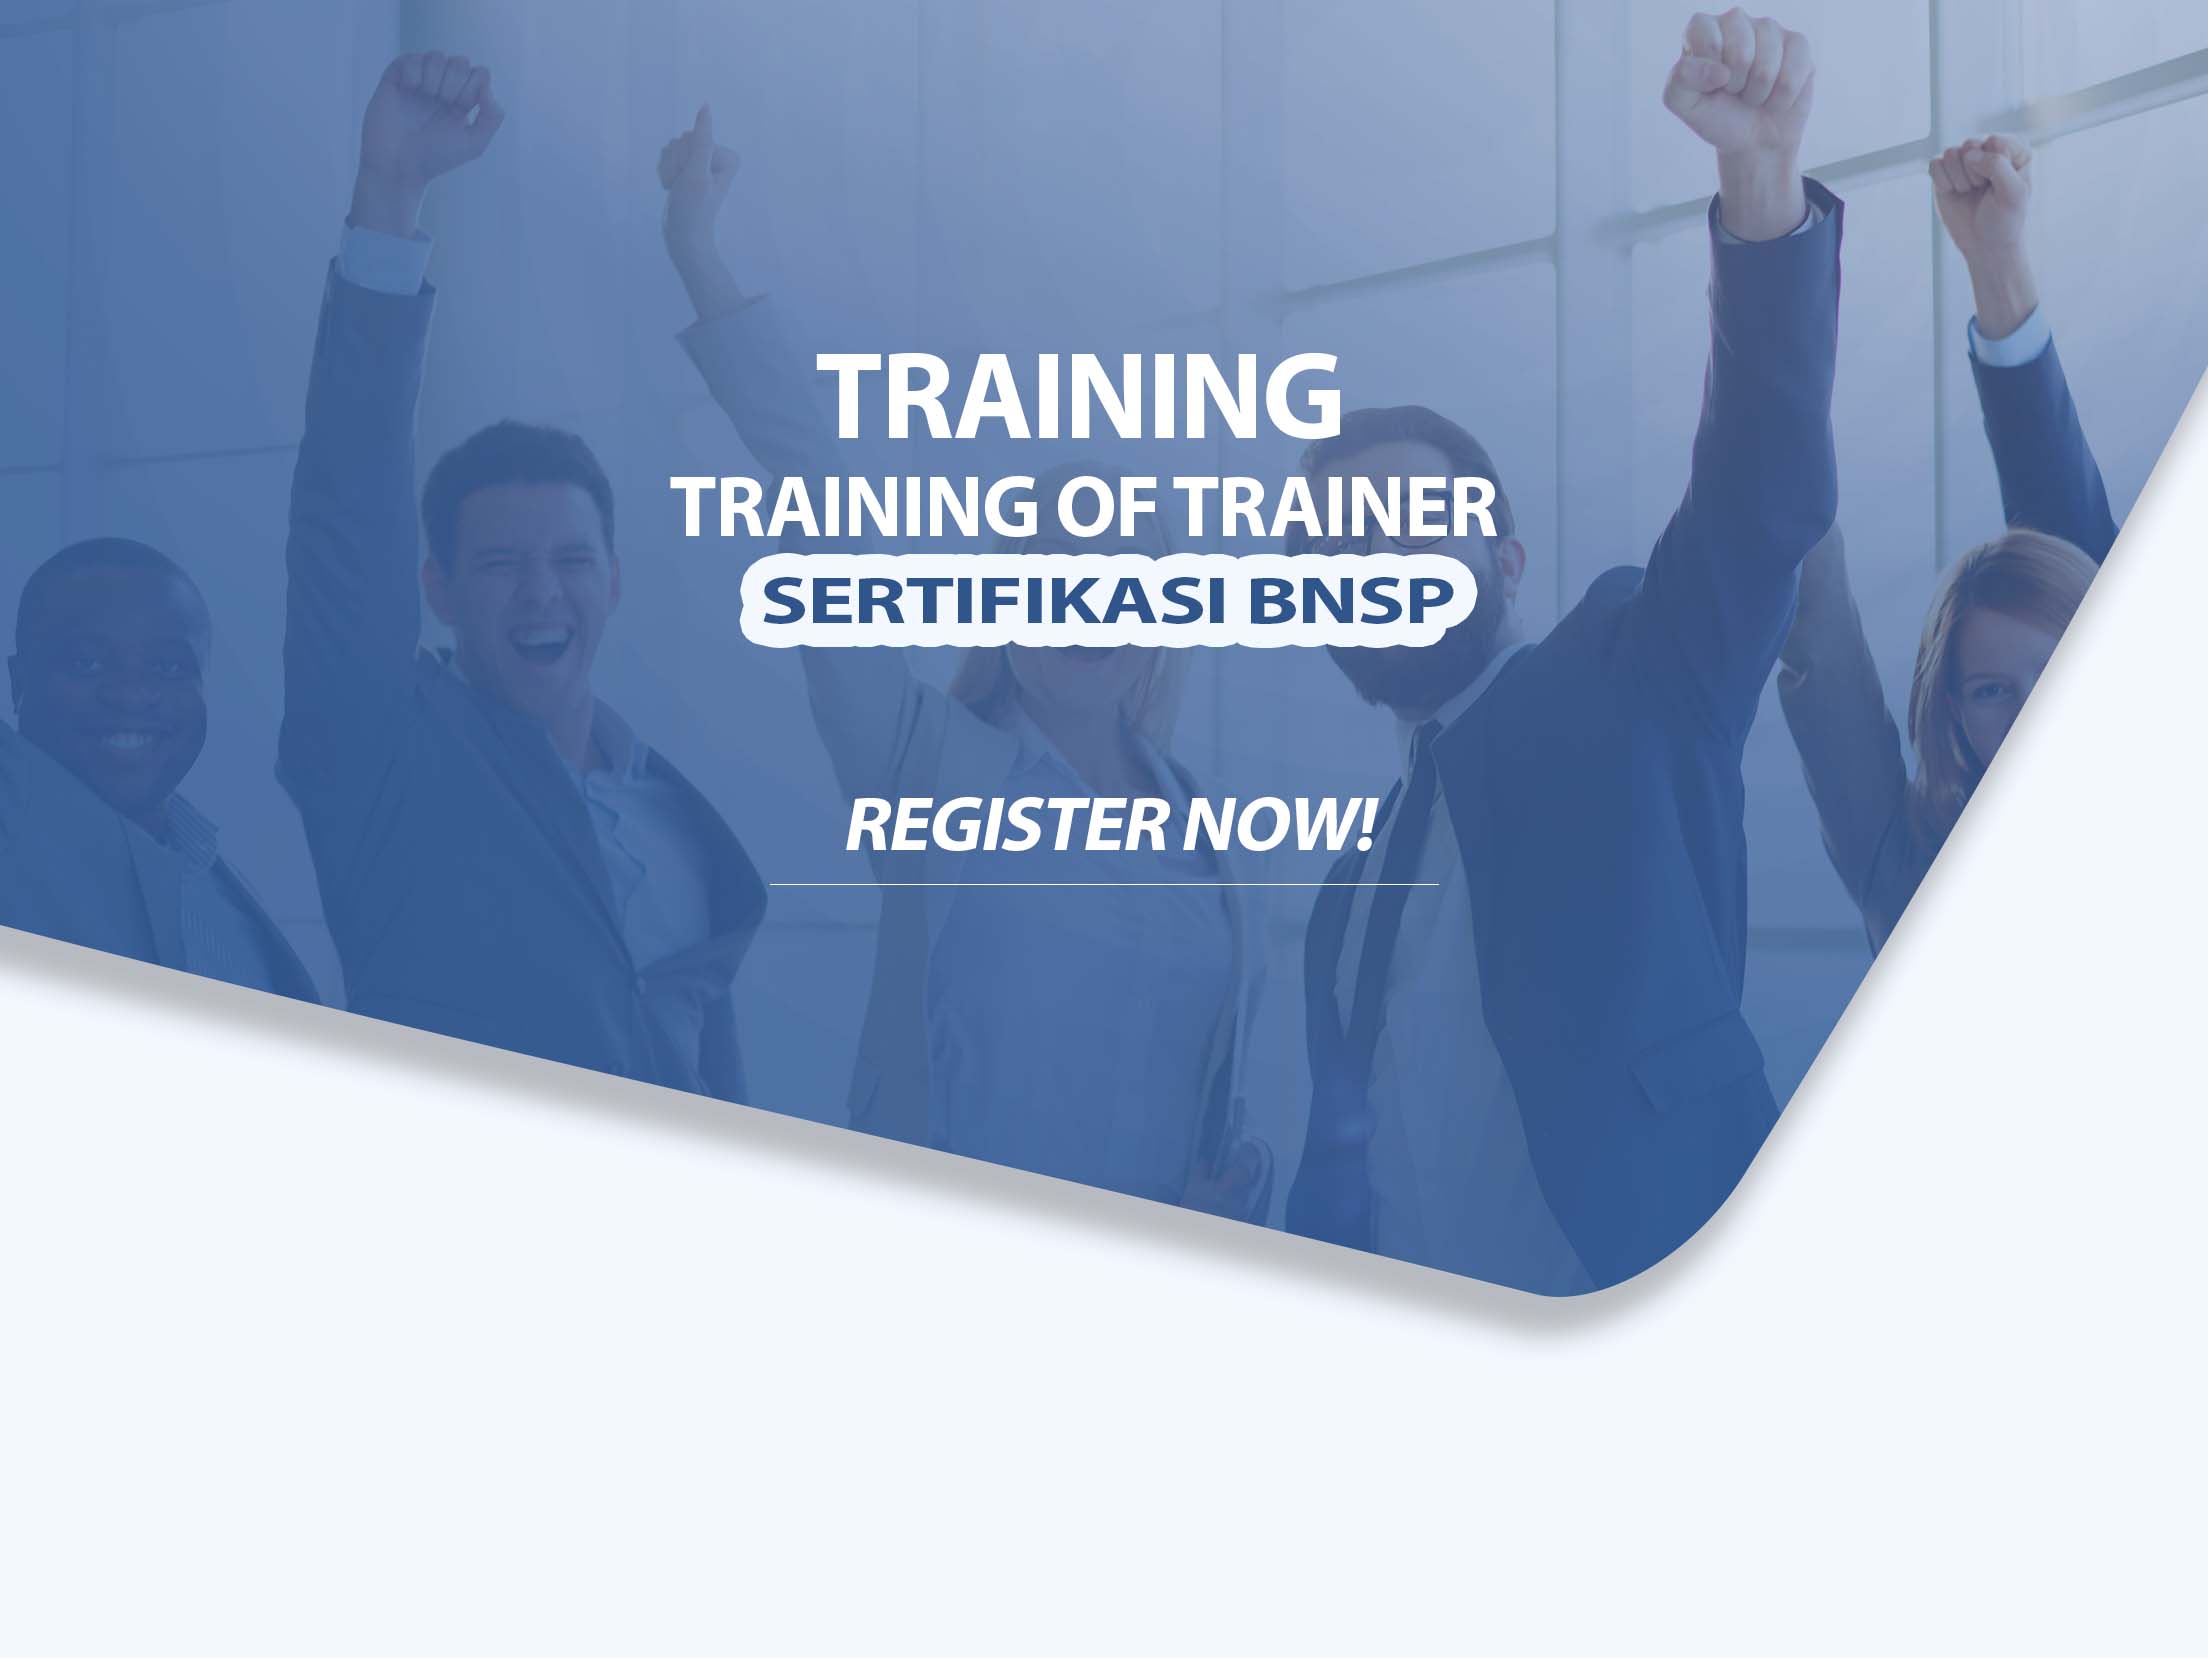 Training of Trainer Sertifikasi BNSP